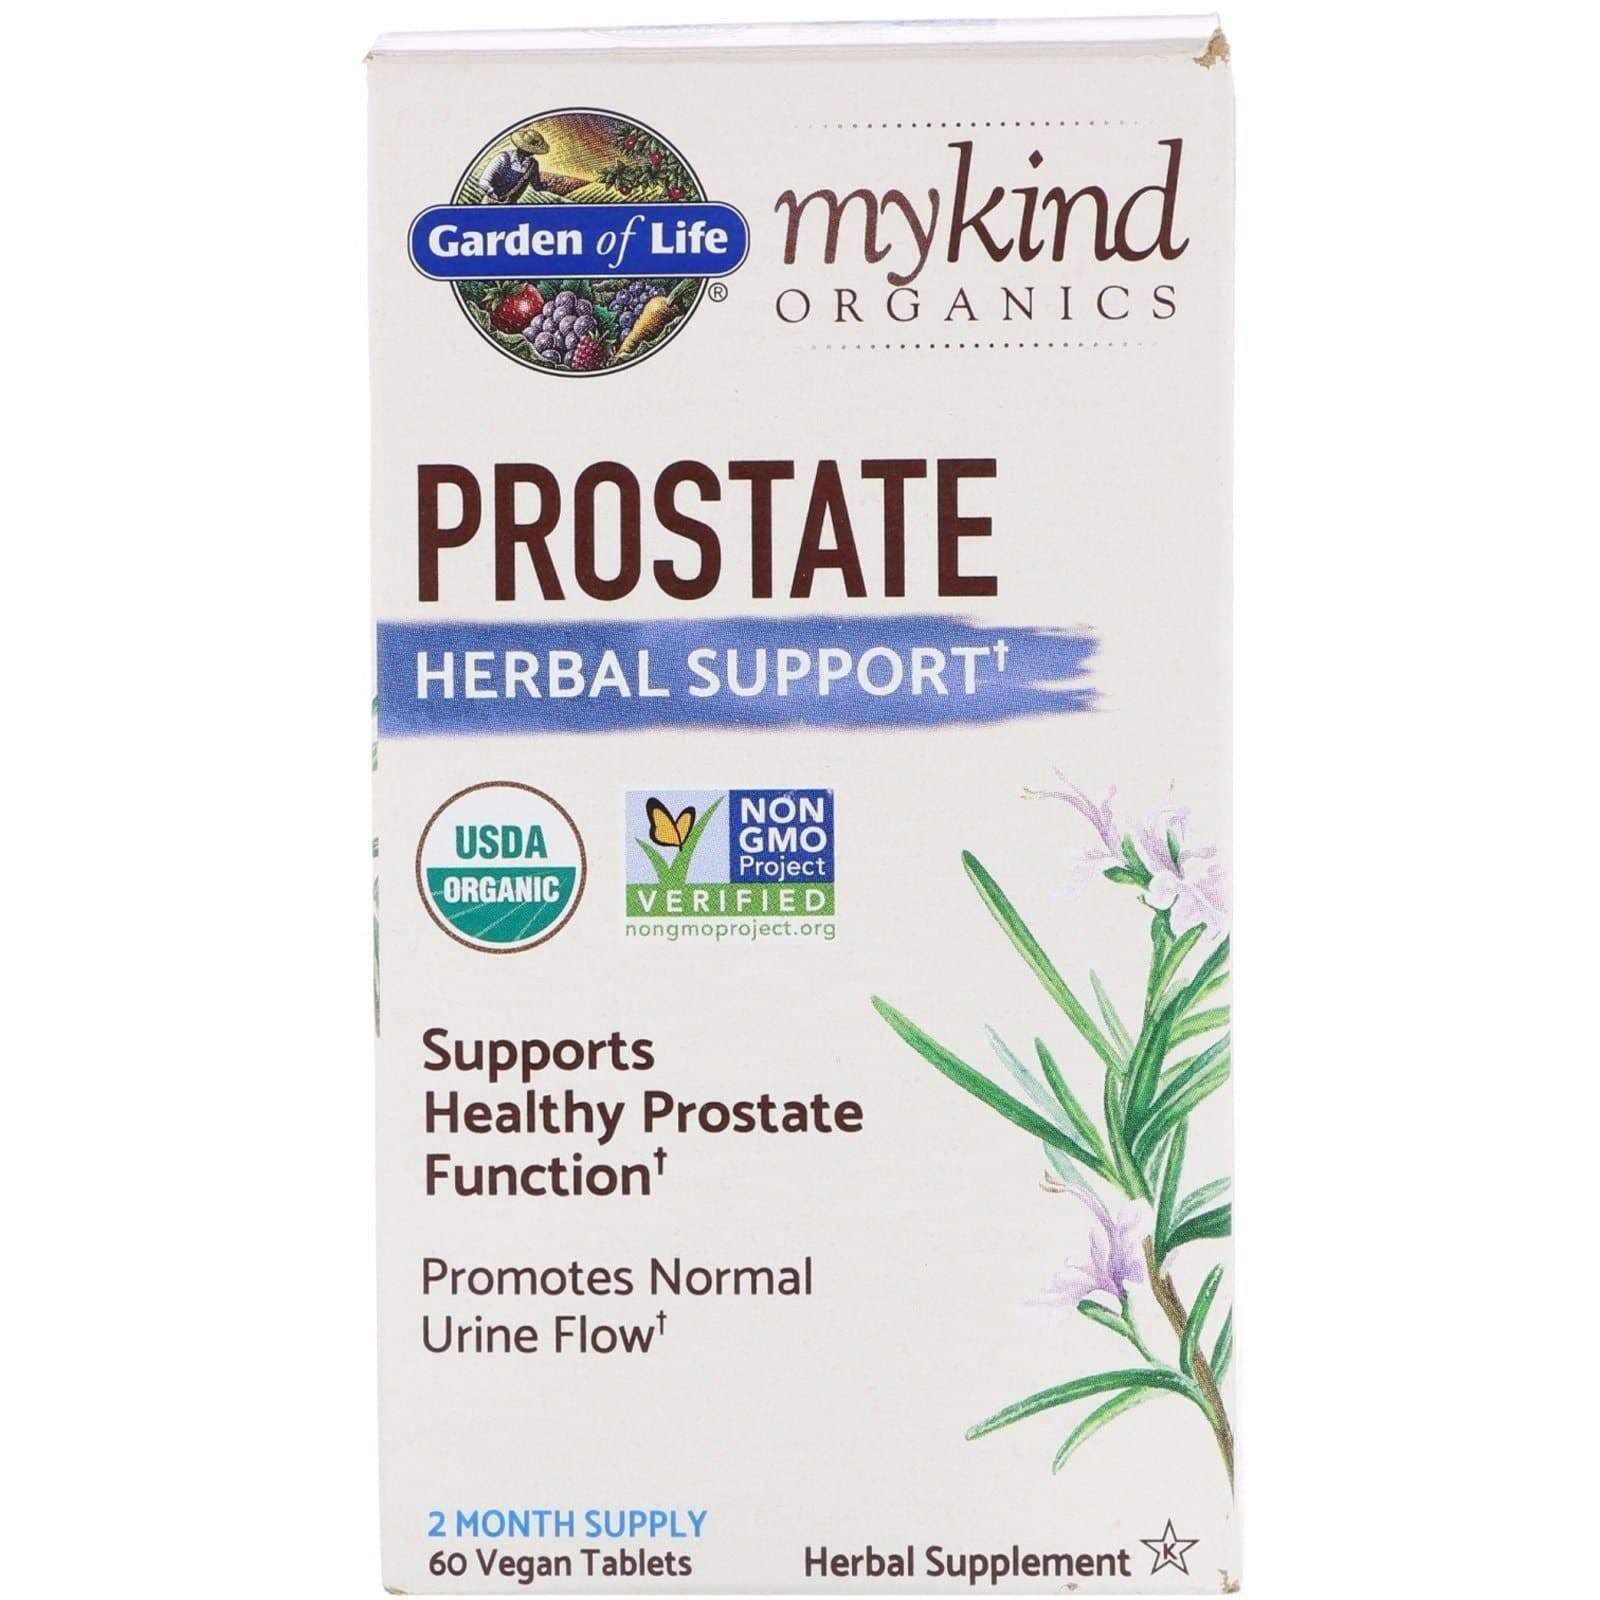 Garden of Life mykind Organics Prostate Herbal Support - 60 Vegan